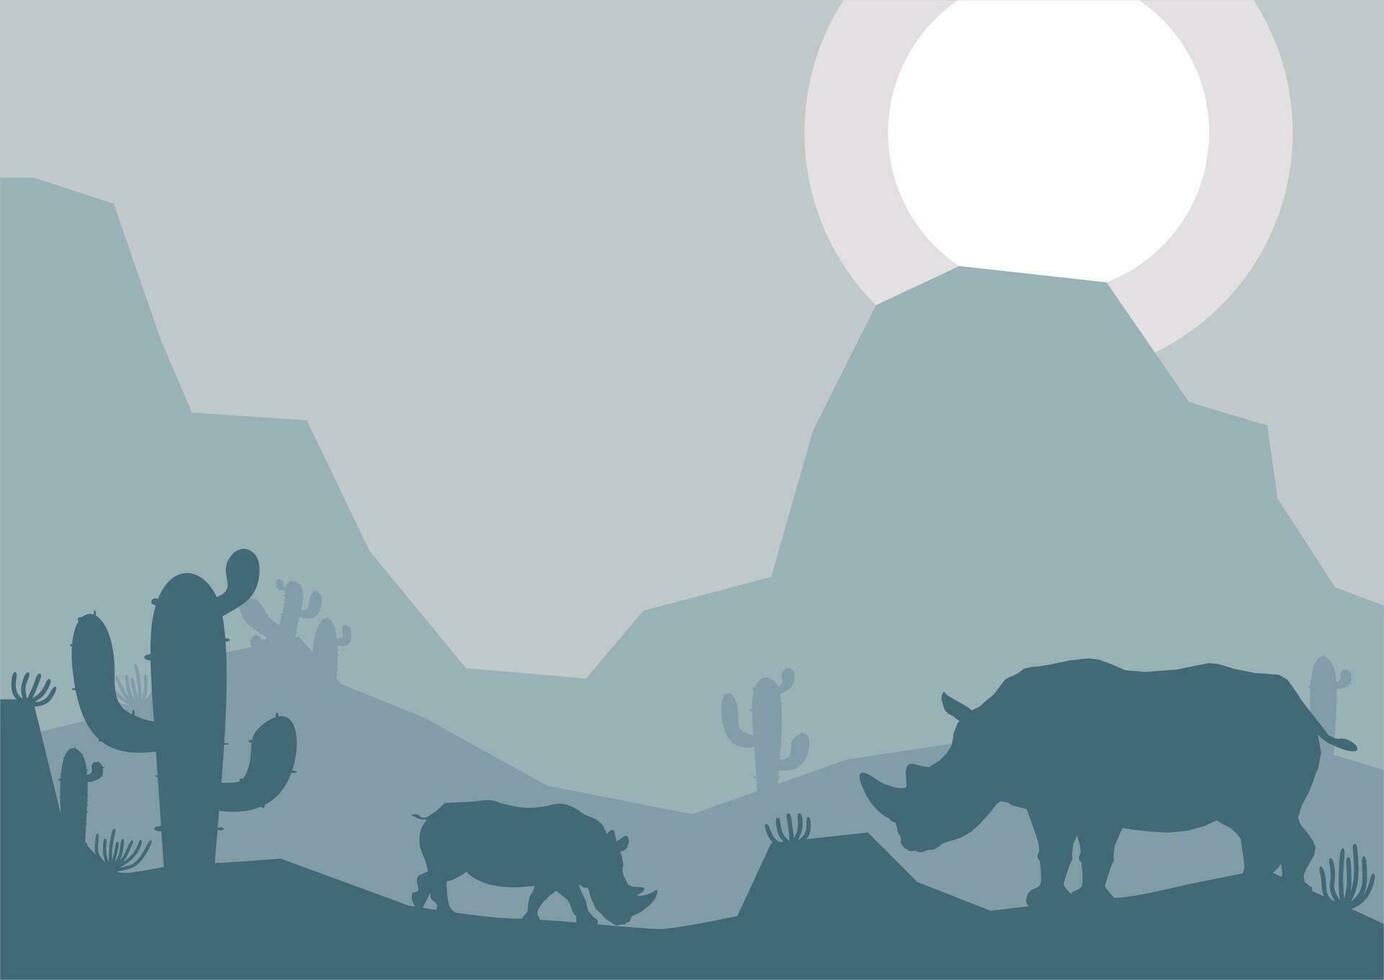 Rhinoceros animal silhouette desert savanna landscape flat design vector illustration